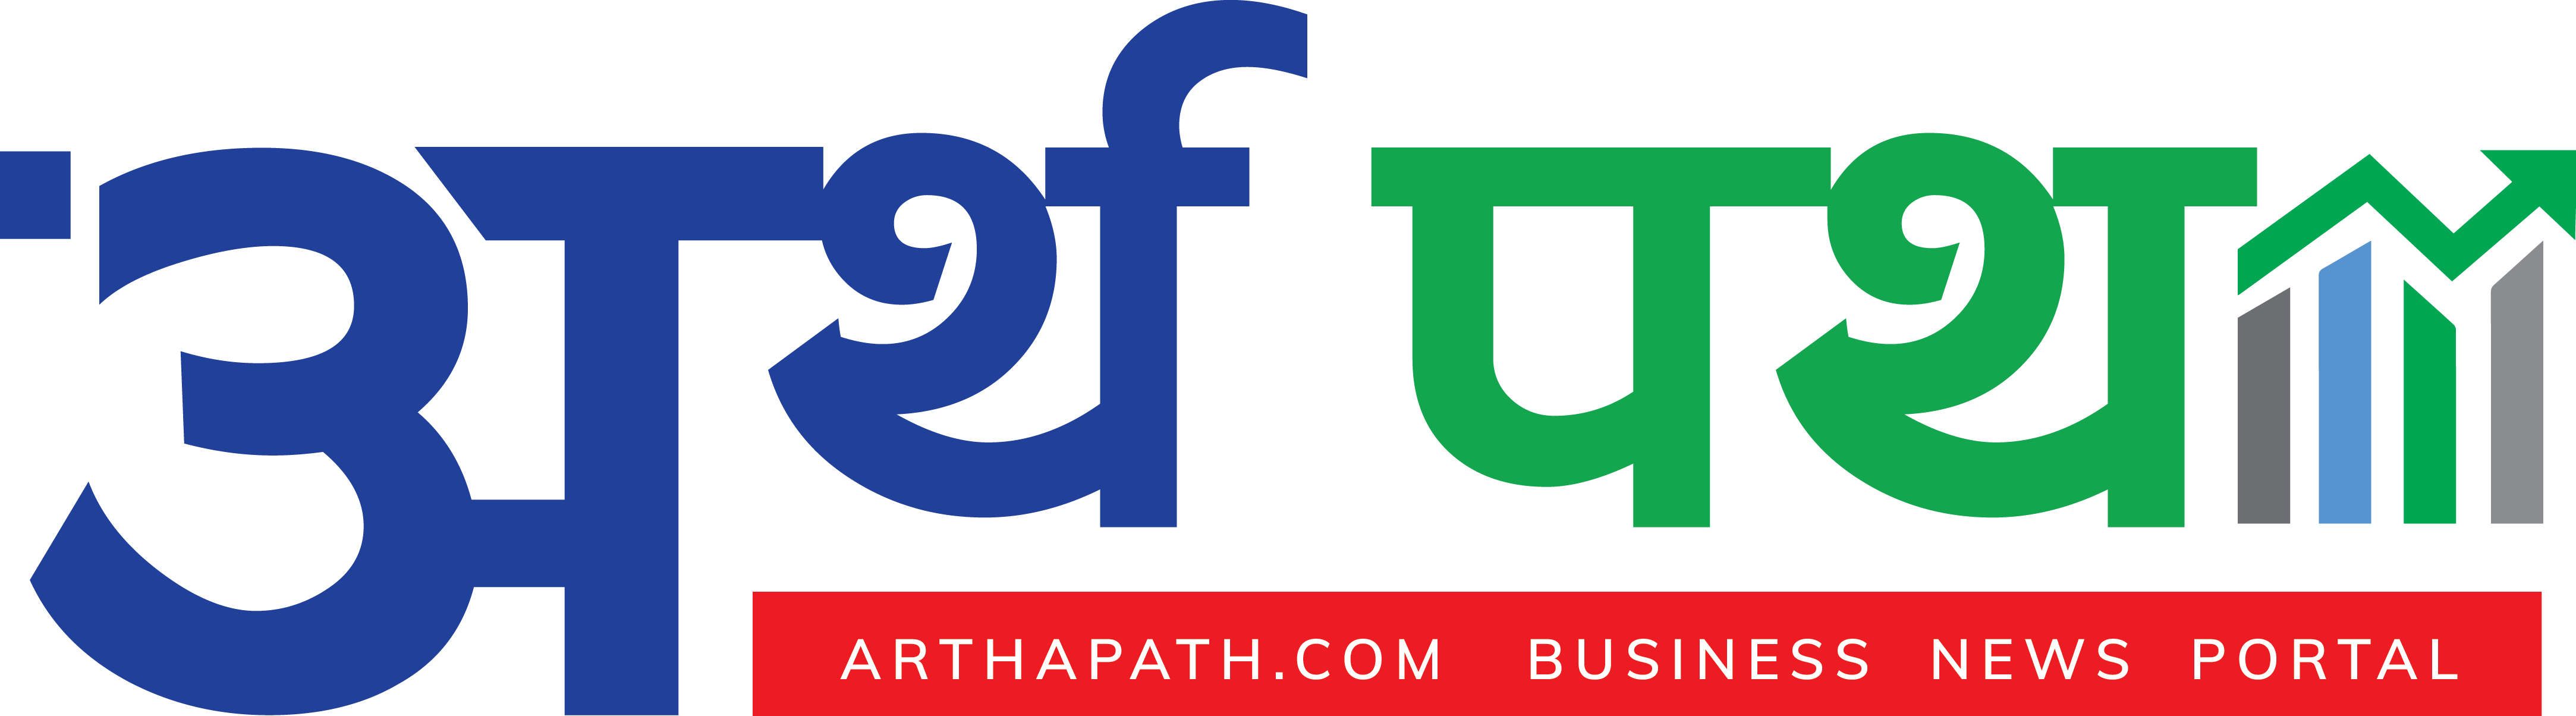 Logo arthapath